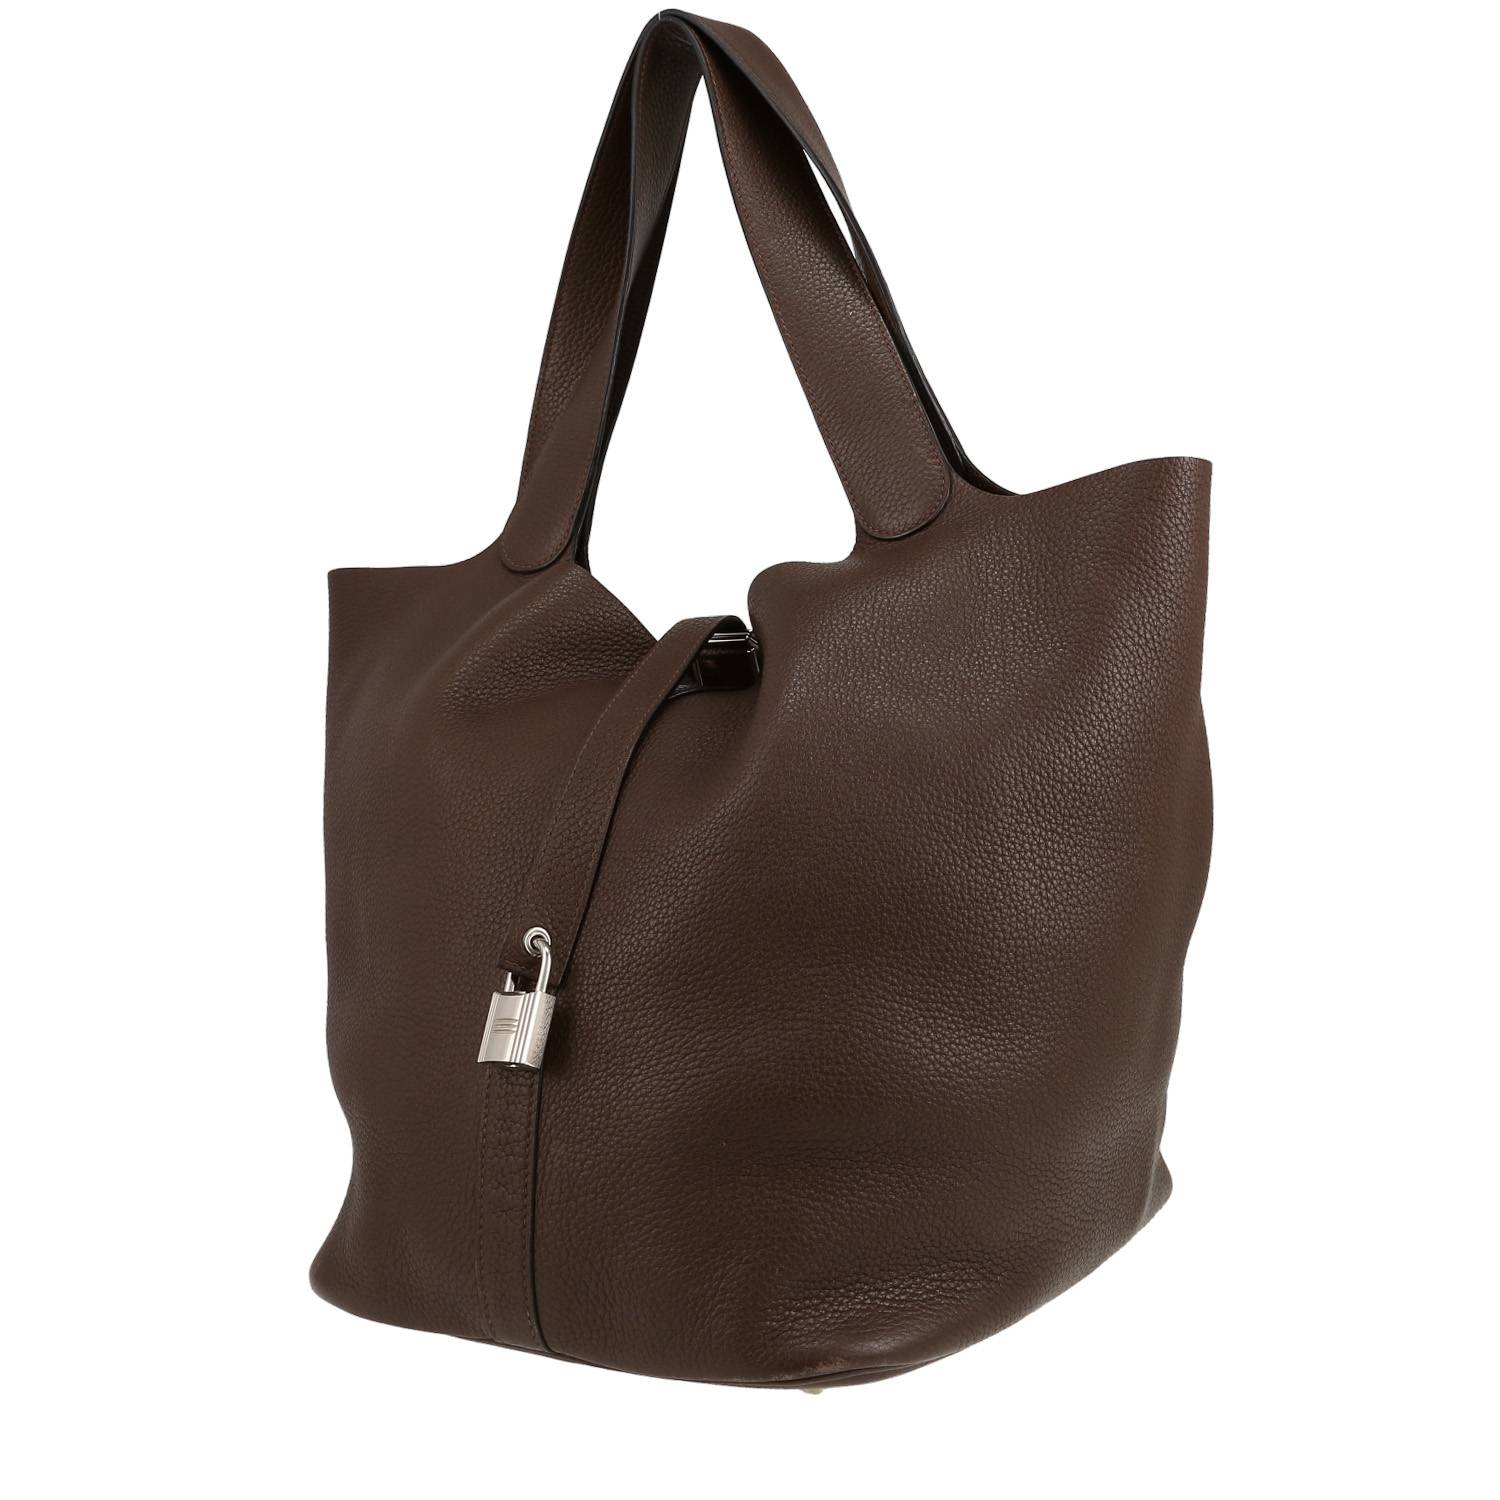 Picotin Large Model Handbag In Brown Togo Leather